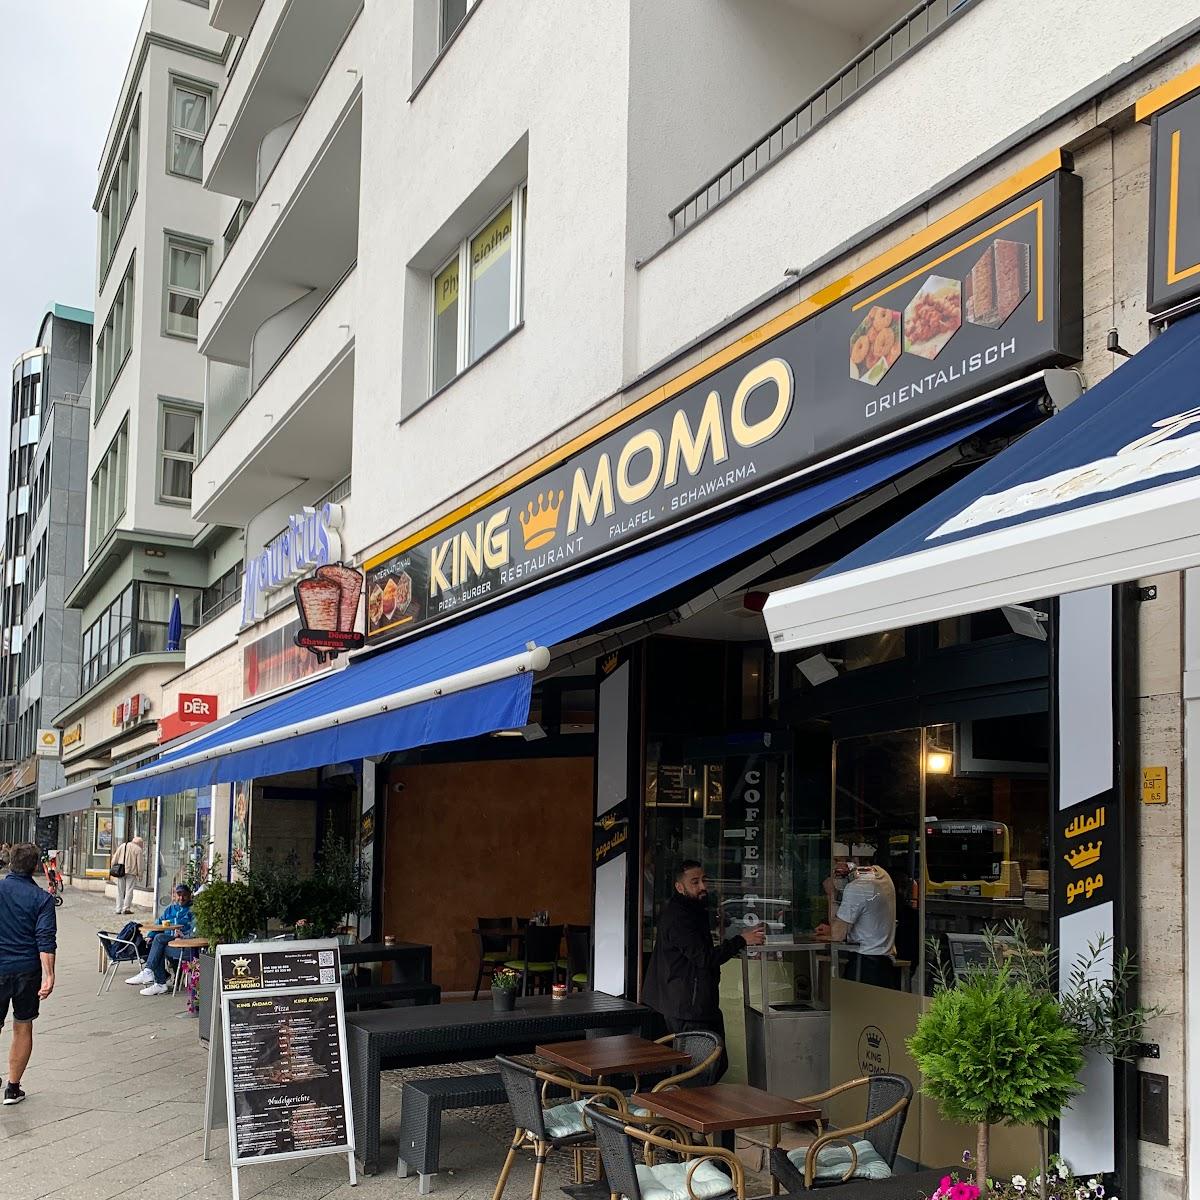 Restaurant "KING MOMO" in Berlin